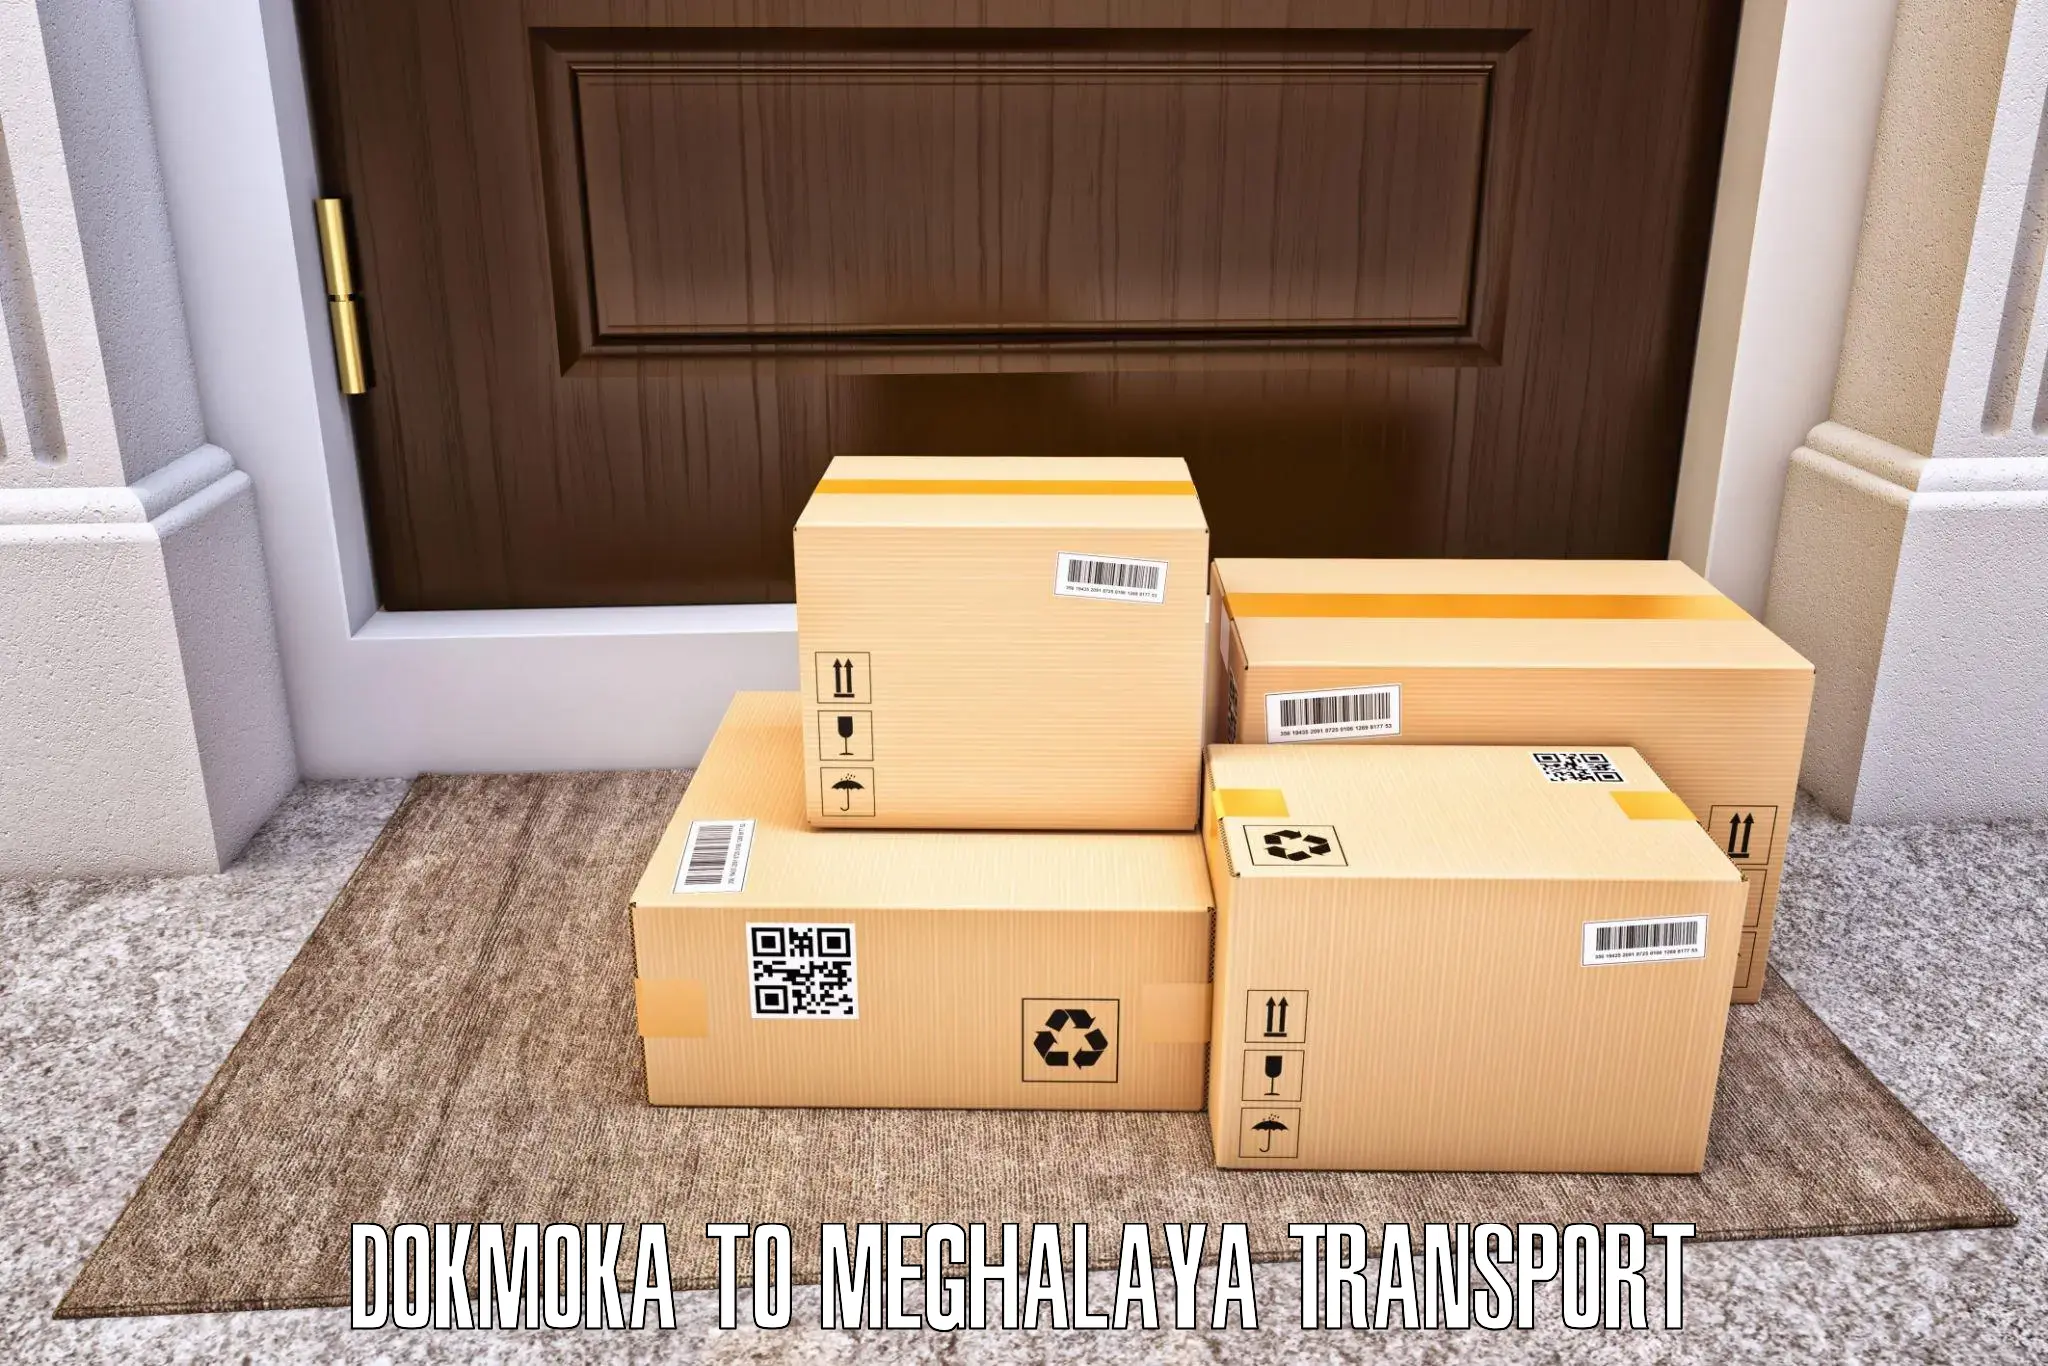 Two wheeler parcel service Dokmoka to Shillong